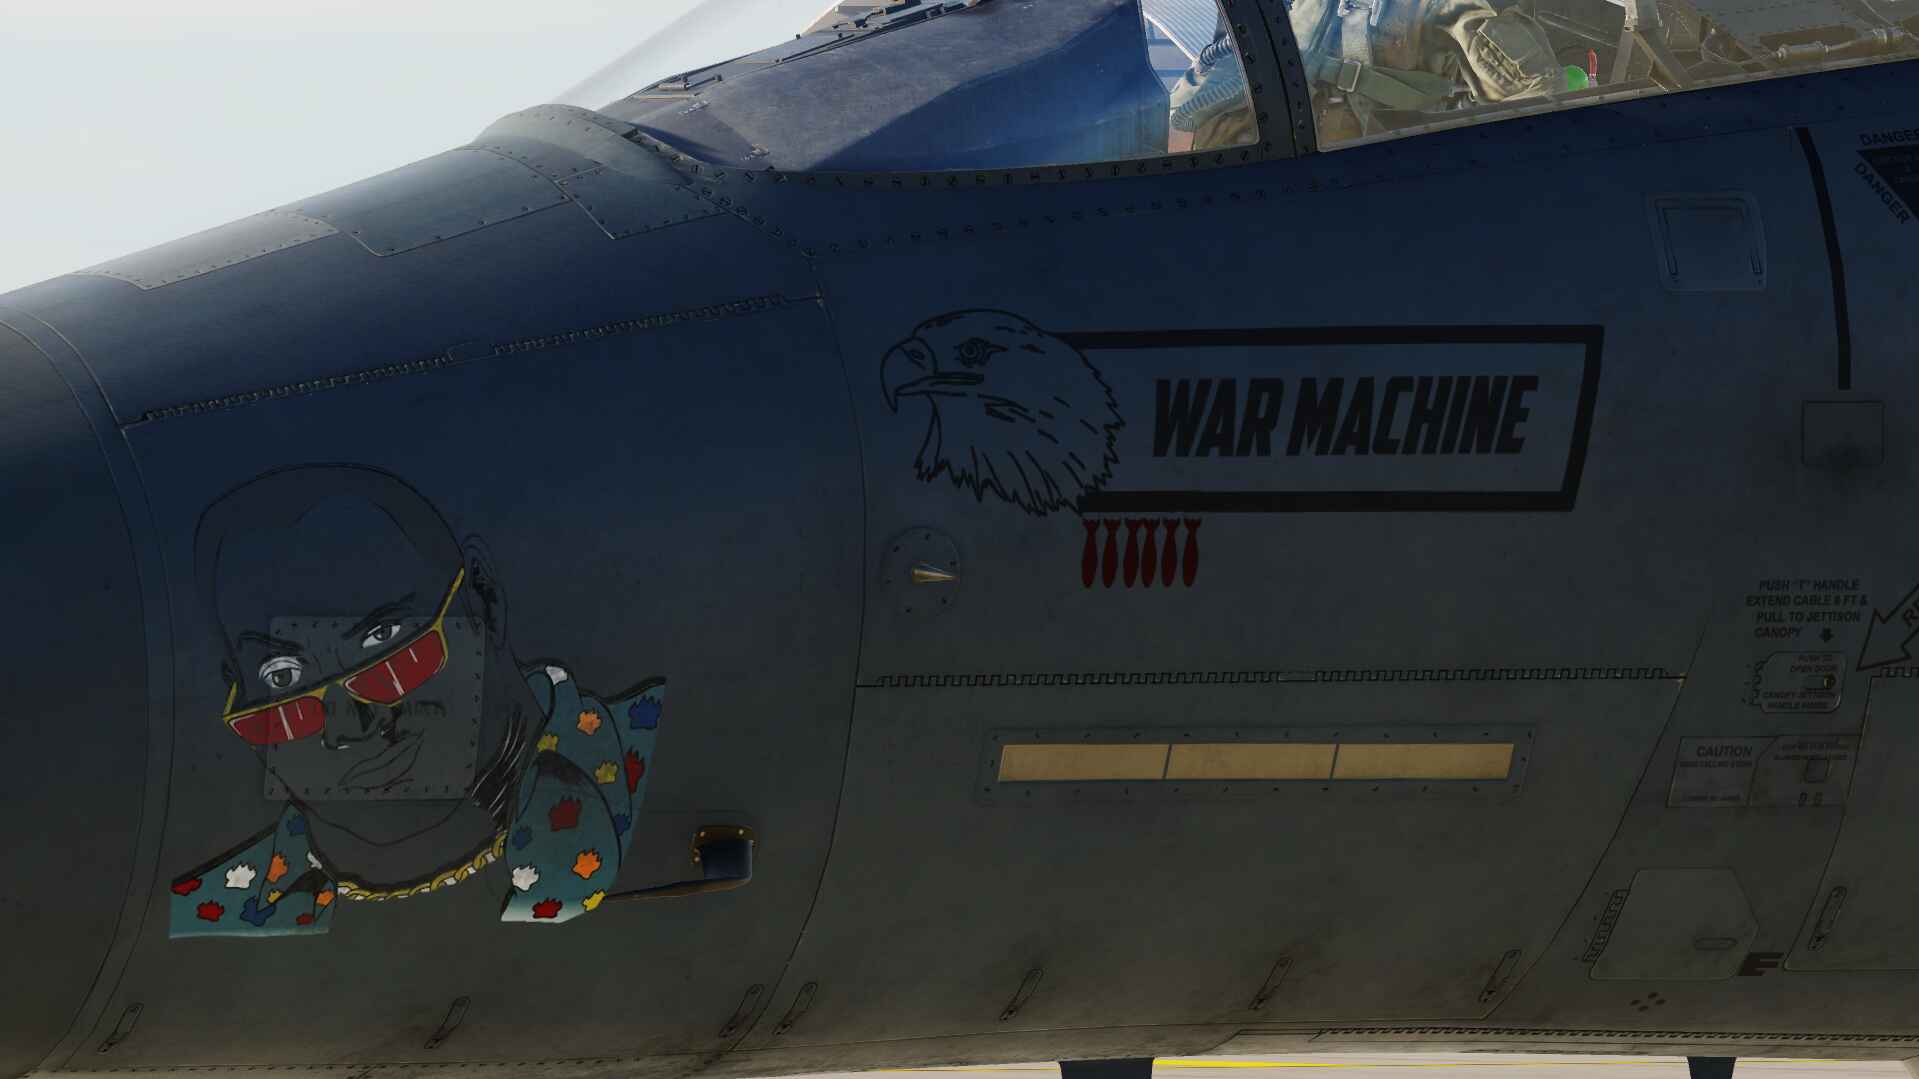 F-15E Strike eagle LN 91-310 "War Machine"